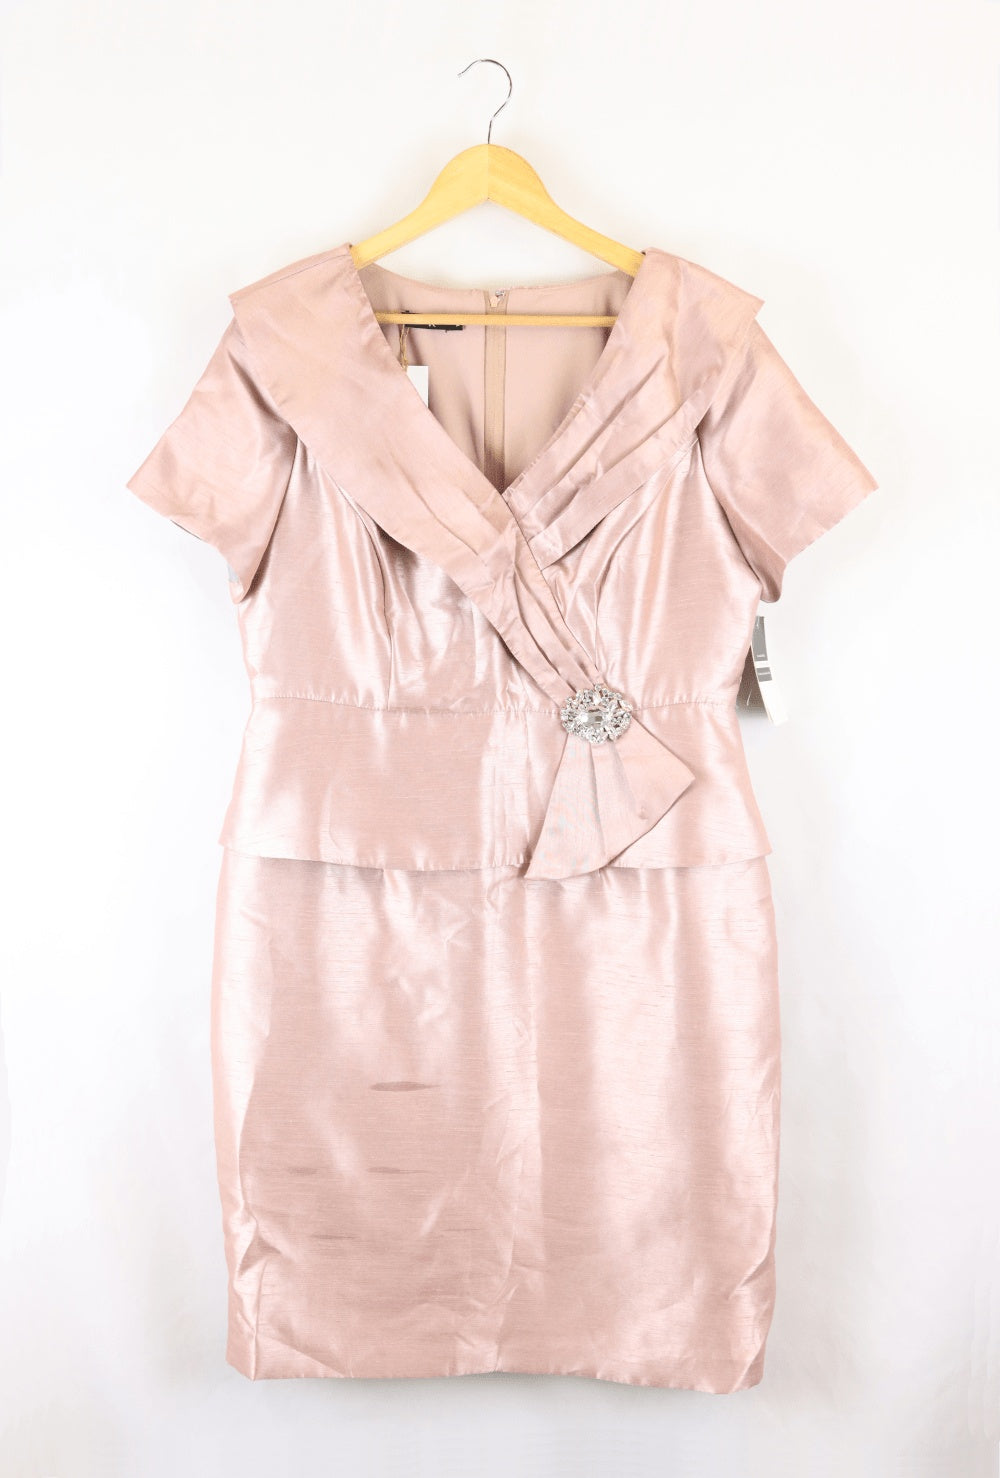 Laura K Pink Dress 14